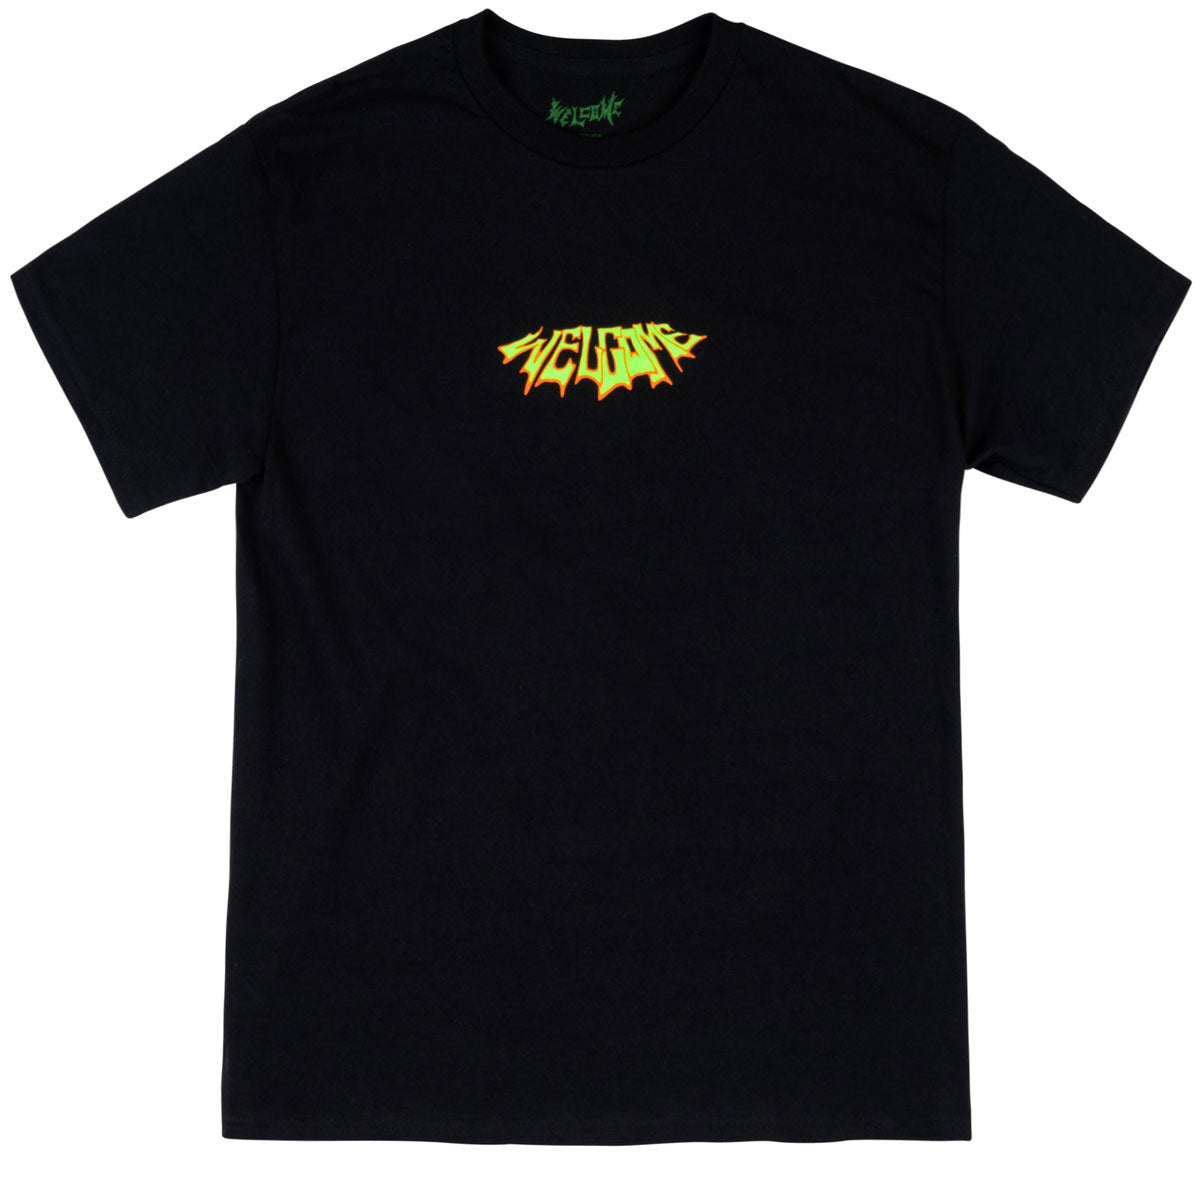 Welcome Shell T-Shirt - Black/Green/Orange image 1